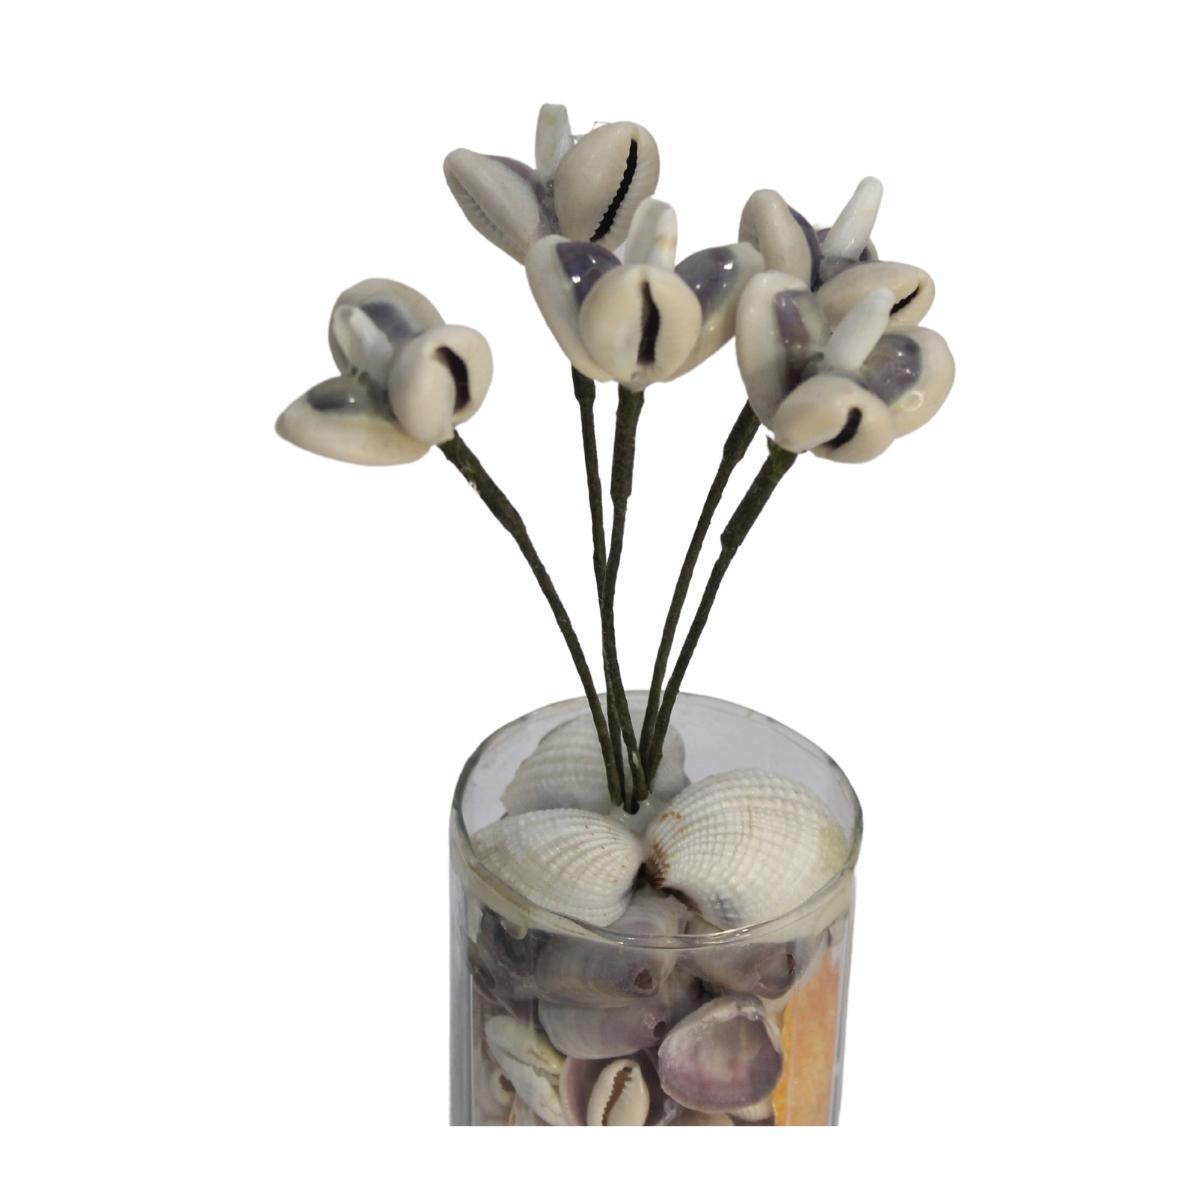 Flower Glass Seashell Show Pieces For Home Decor Item